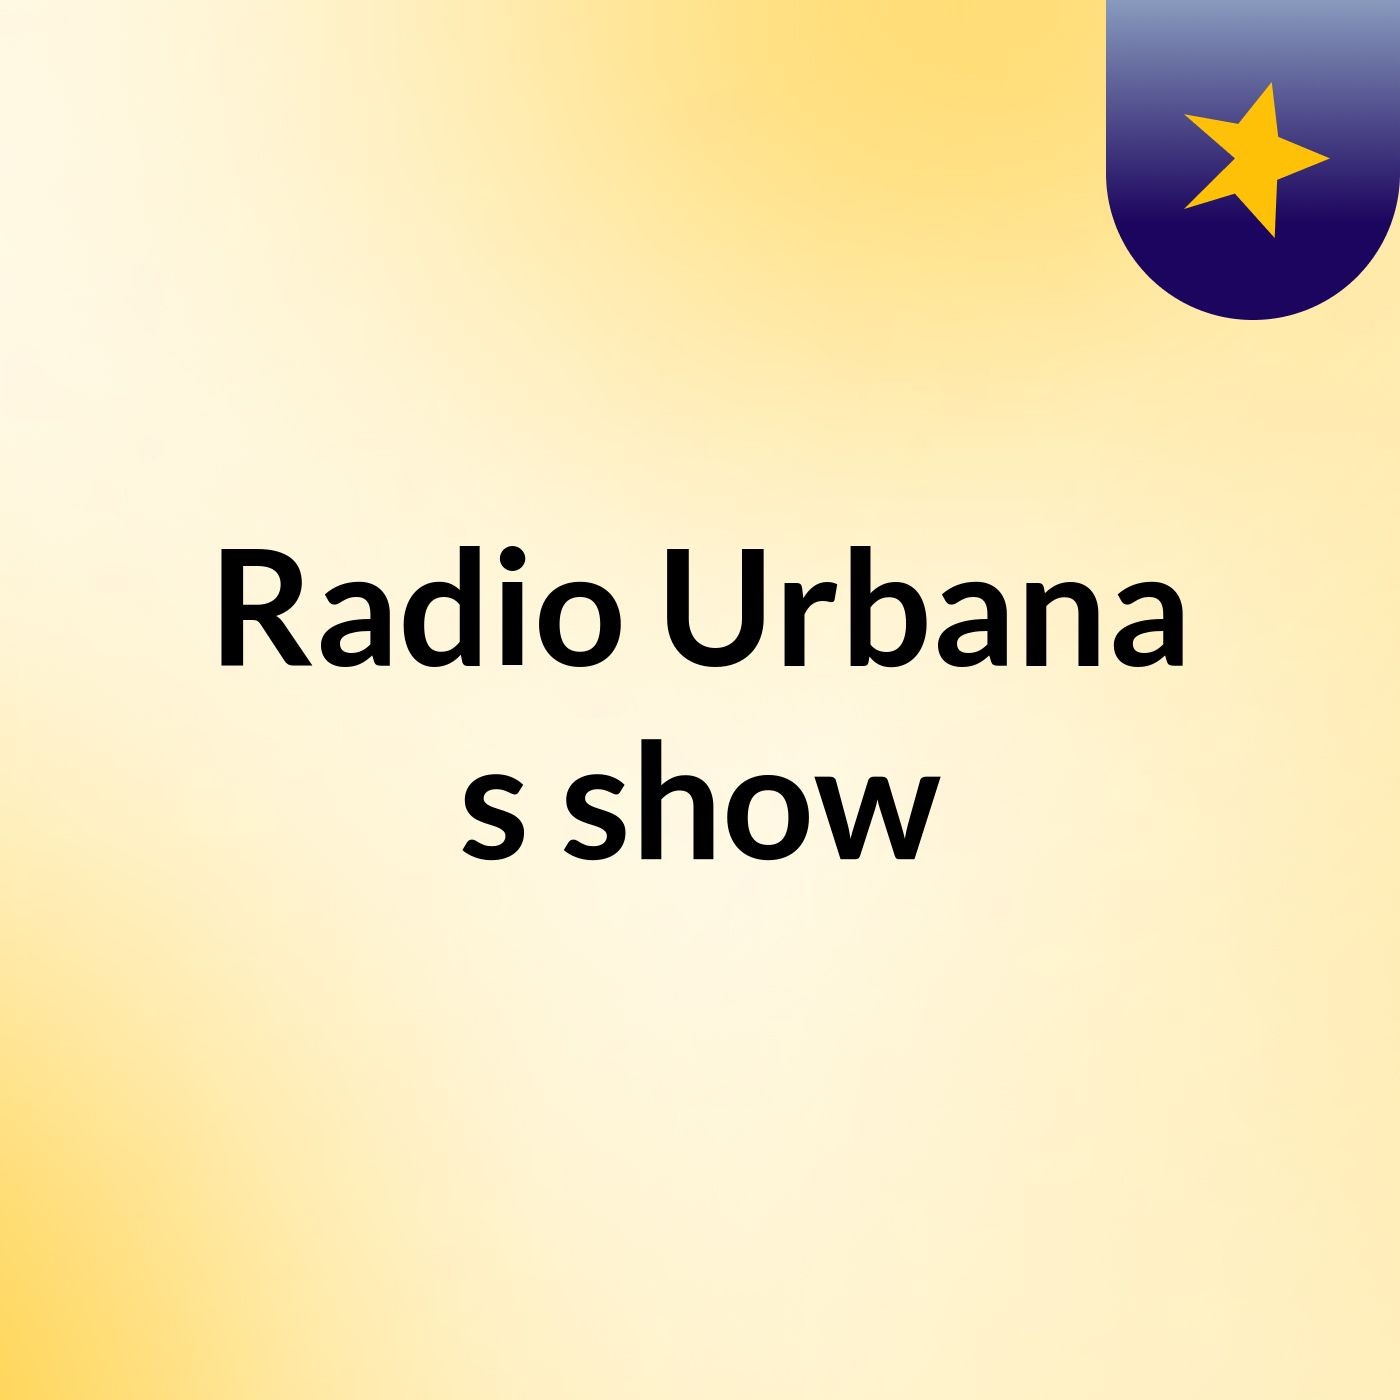 Tranmicion Radio Urbana